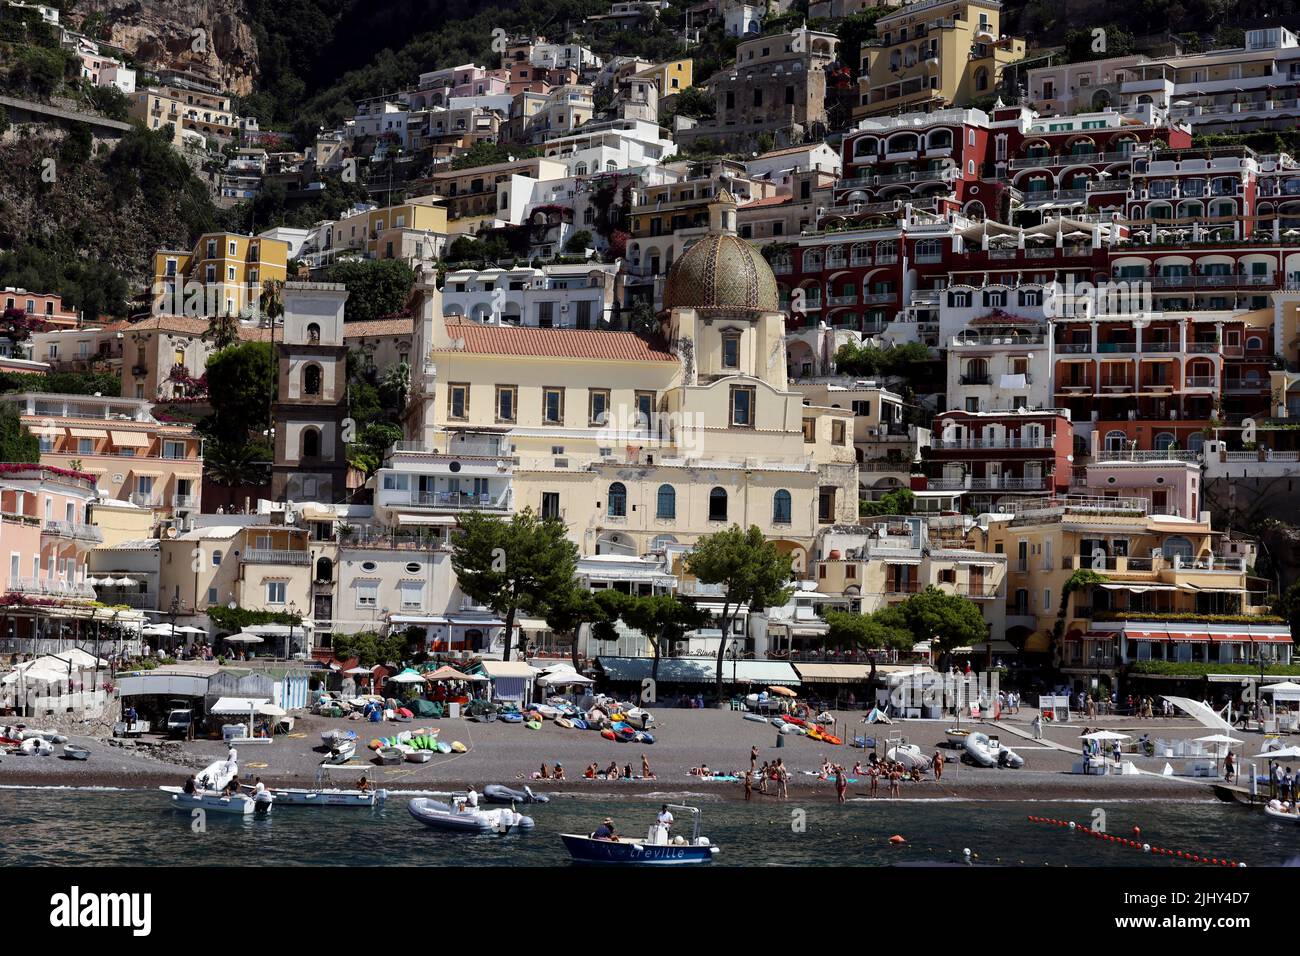 Positano, Amalfi coast Italy  picture by Gavin Rodgers/ Pixel8000 Stock Photo